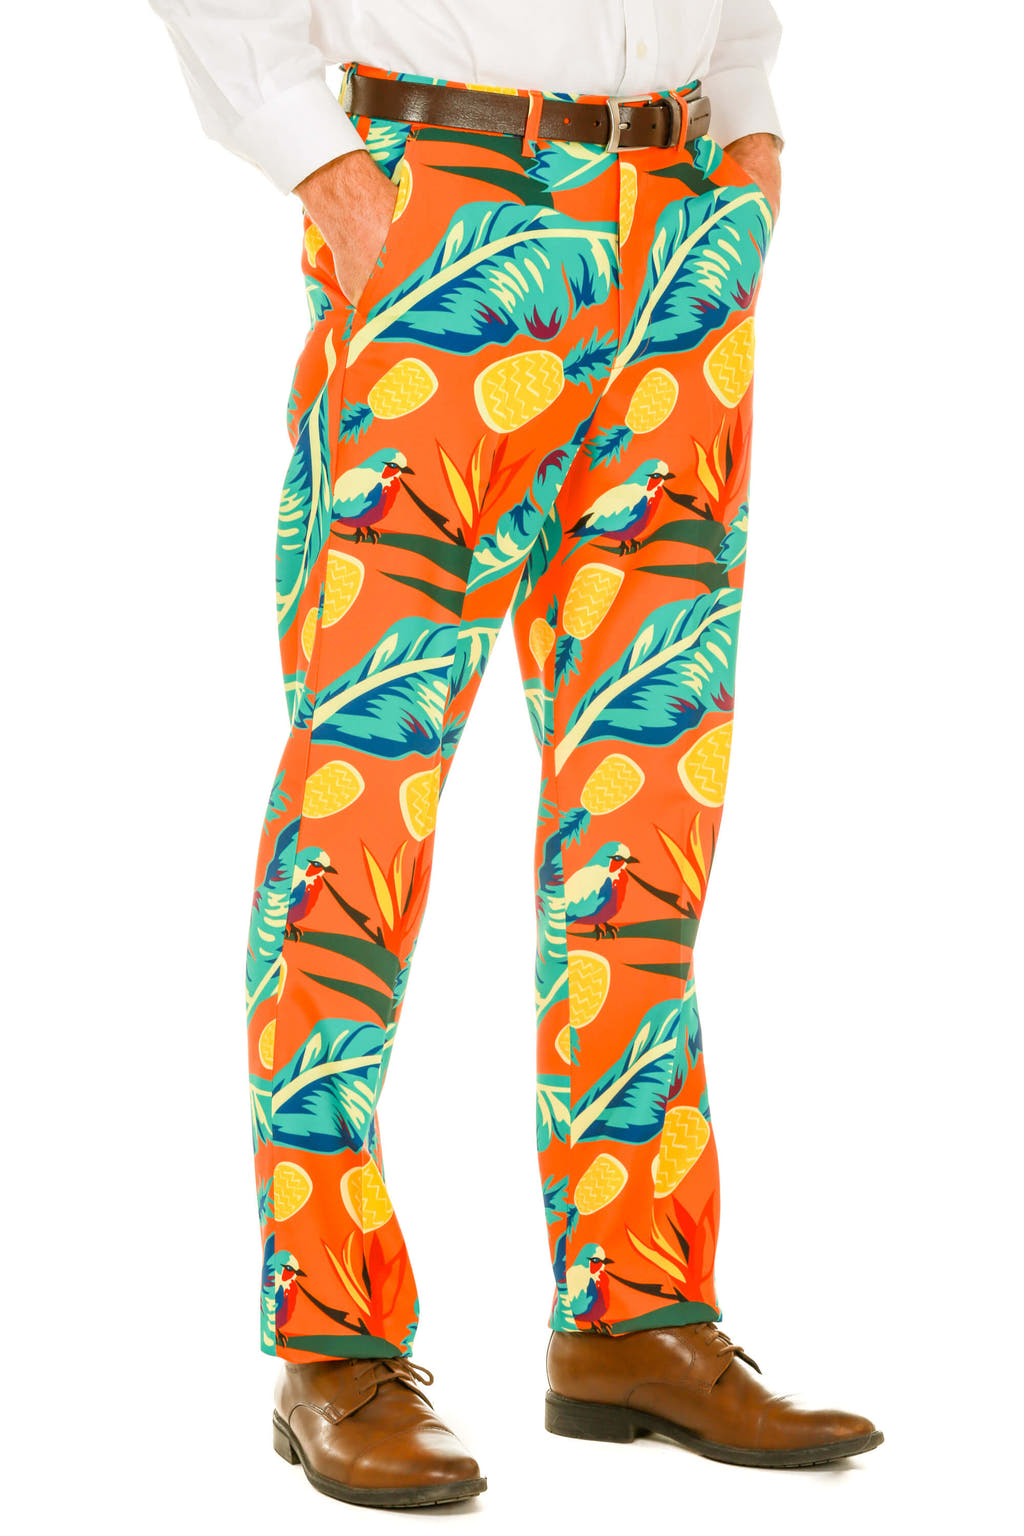 Men's orange tropical island themed pants